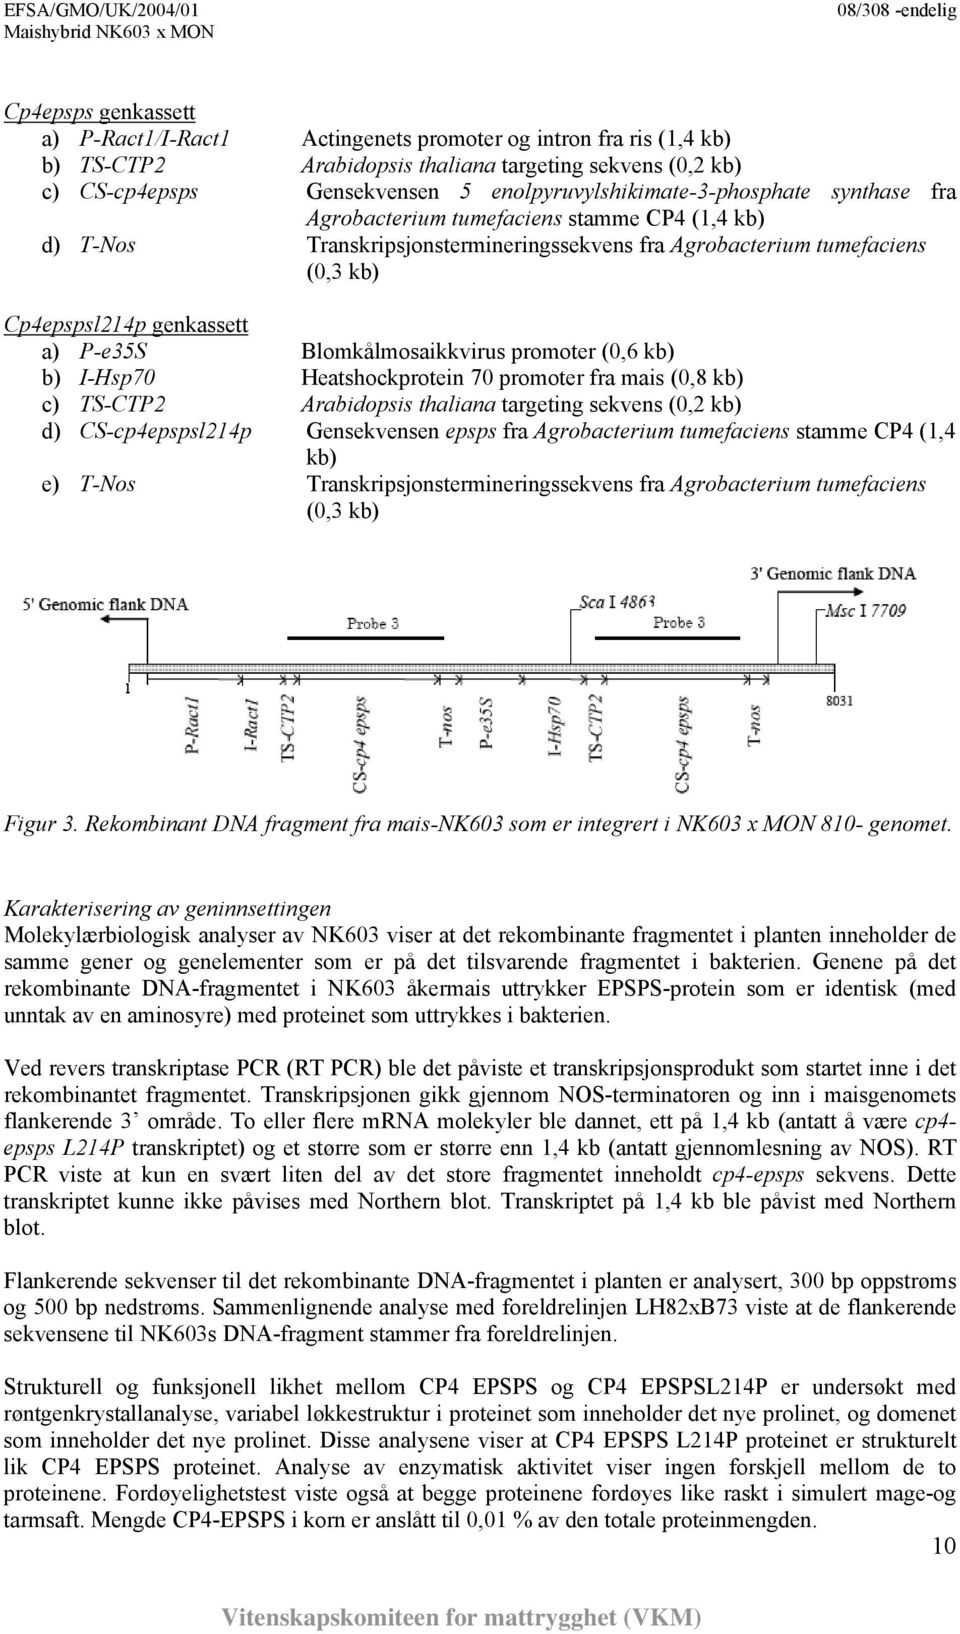 a) P-e35S Blomkålmosaikkvirus promoter (0,6 kb) b) I-Hsp70 Heatshockprotein 70 promoter fra mais (0,8 kb) c) TS-CTP2 Arabidopsis thaliana targeting sekvens (0,2 kb) d) CS-cp4epspsl214p Gensekvensen